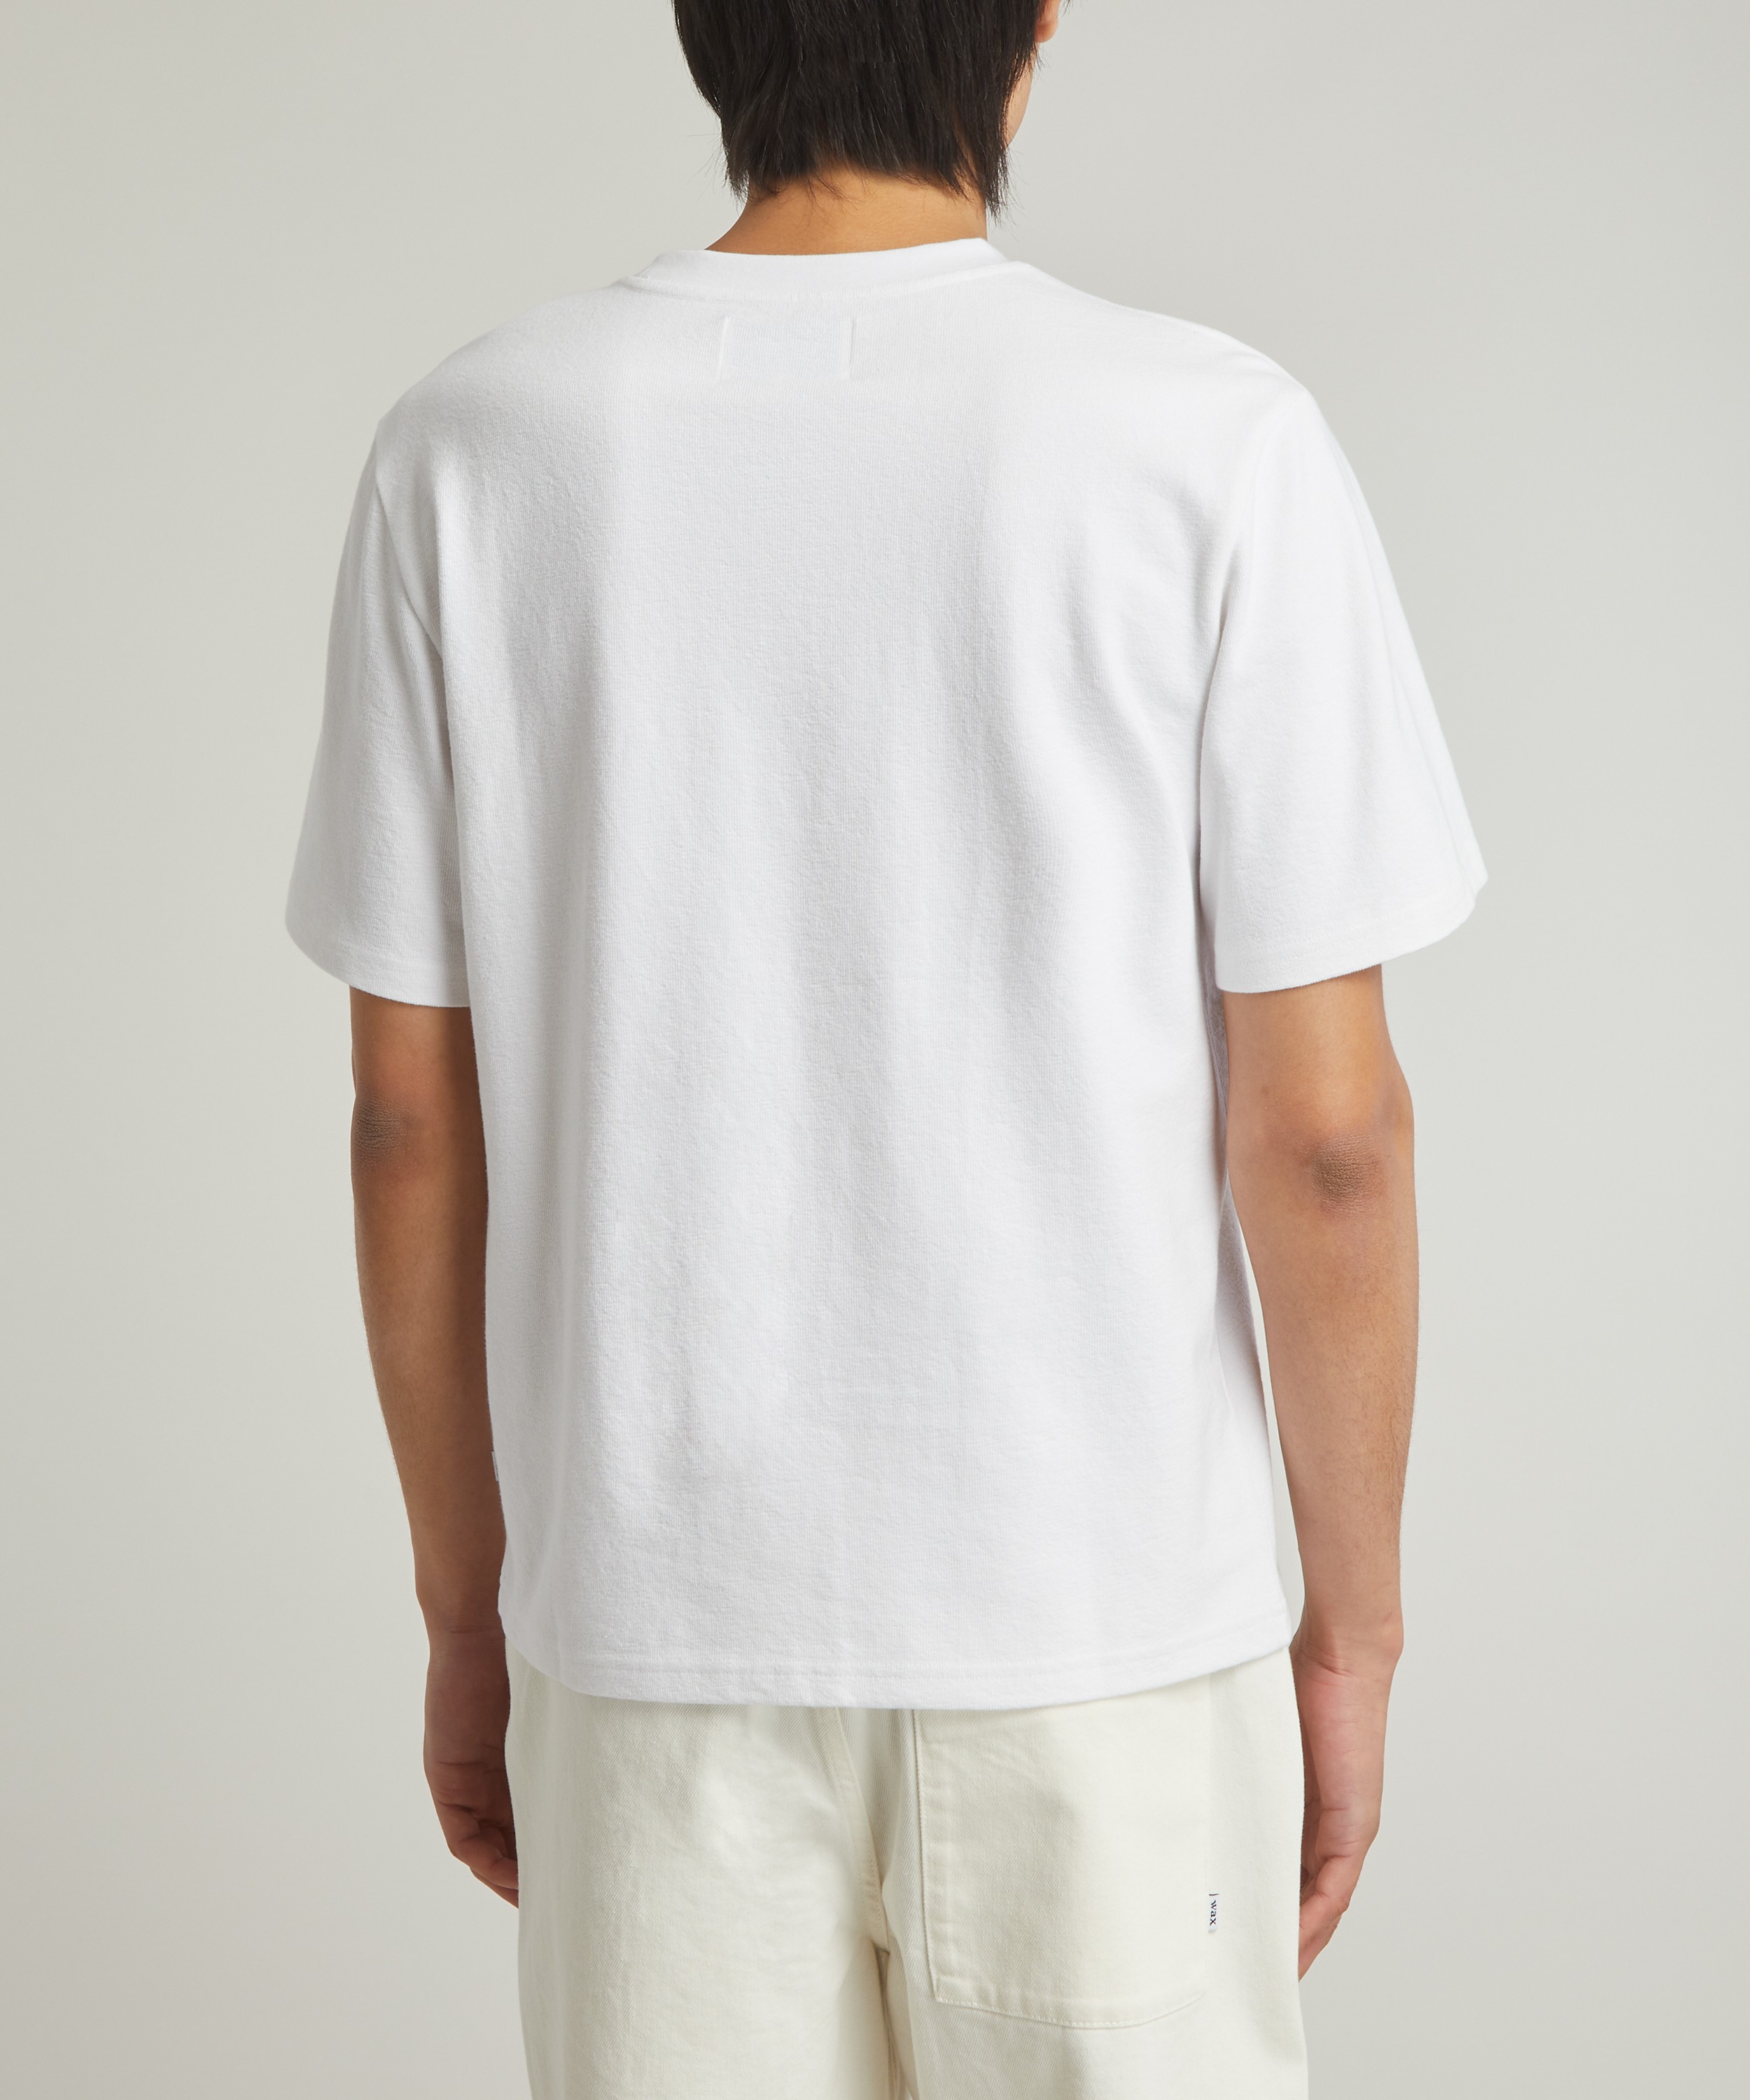 Wax London - Dean Textured Jolt White T-Shirt image number 3